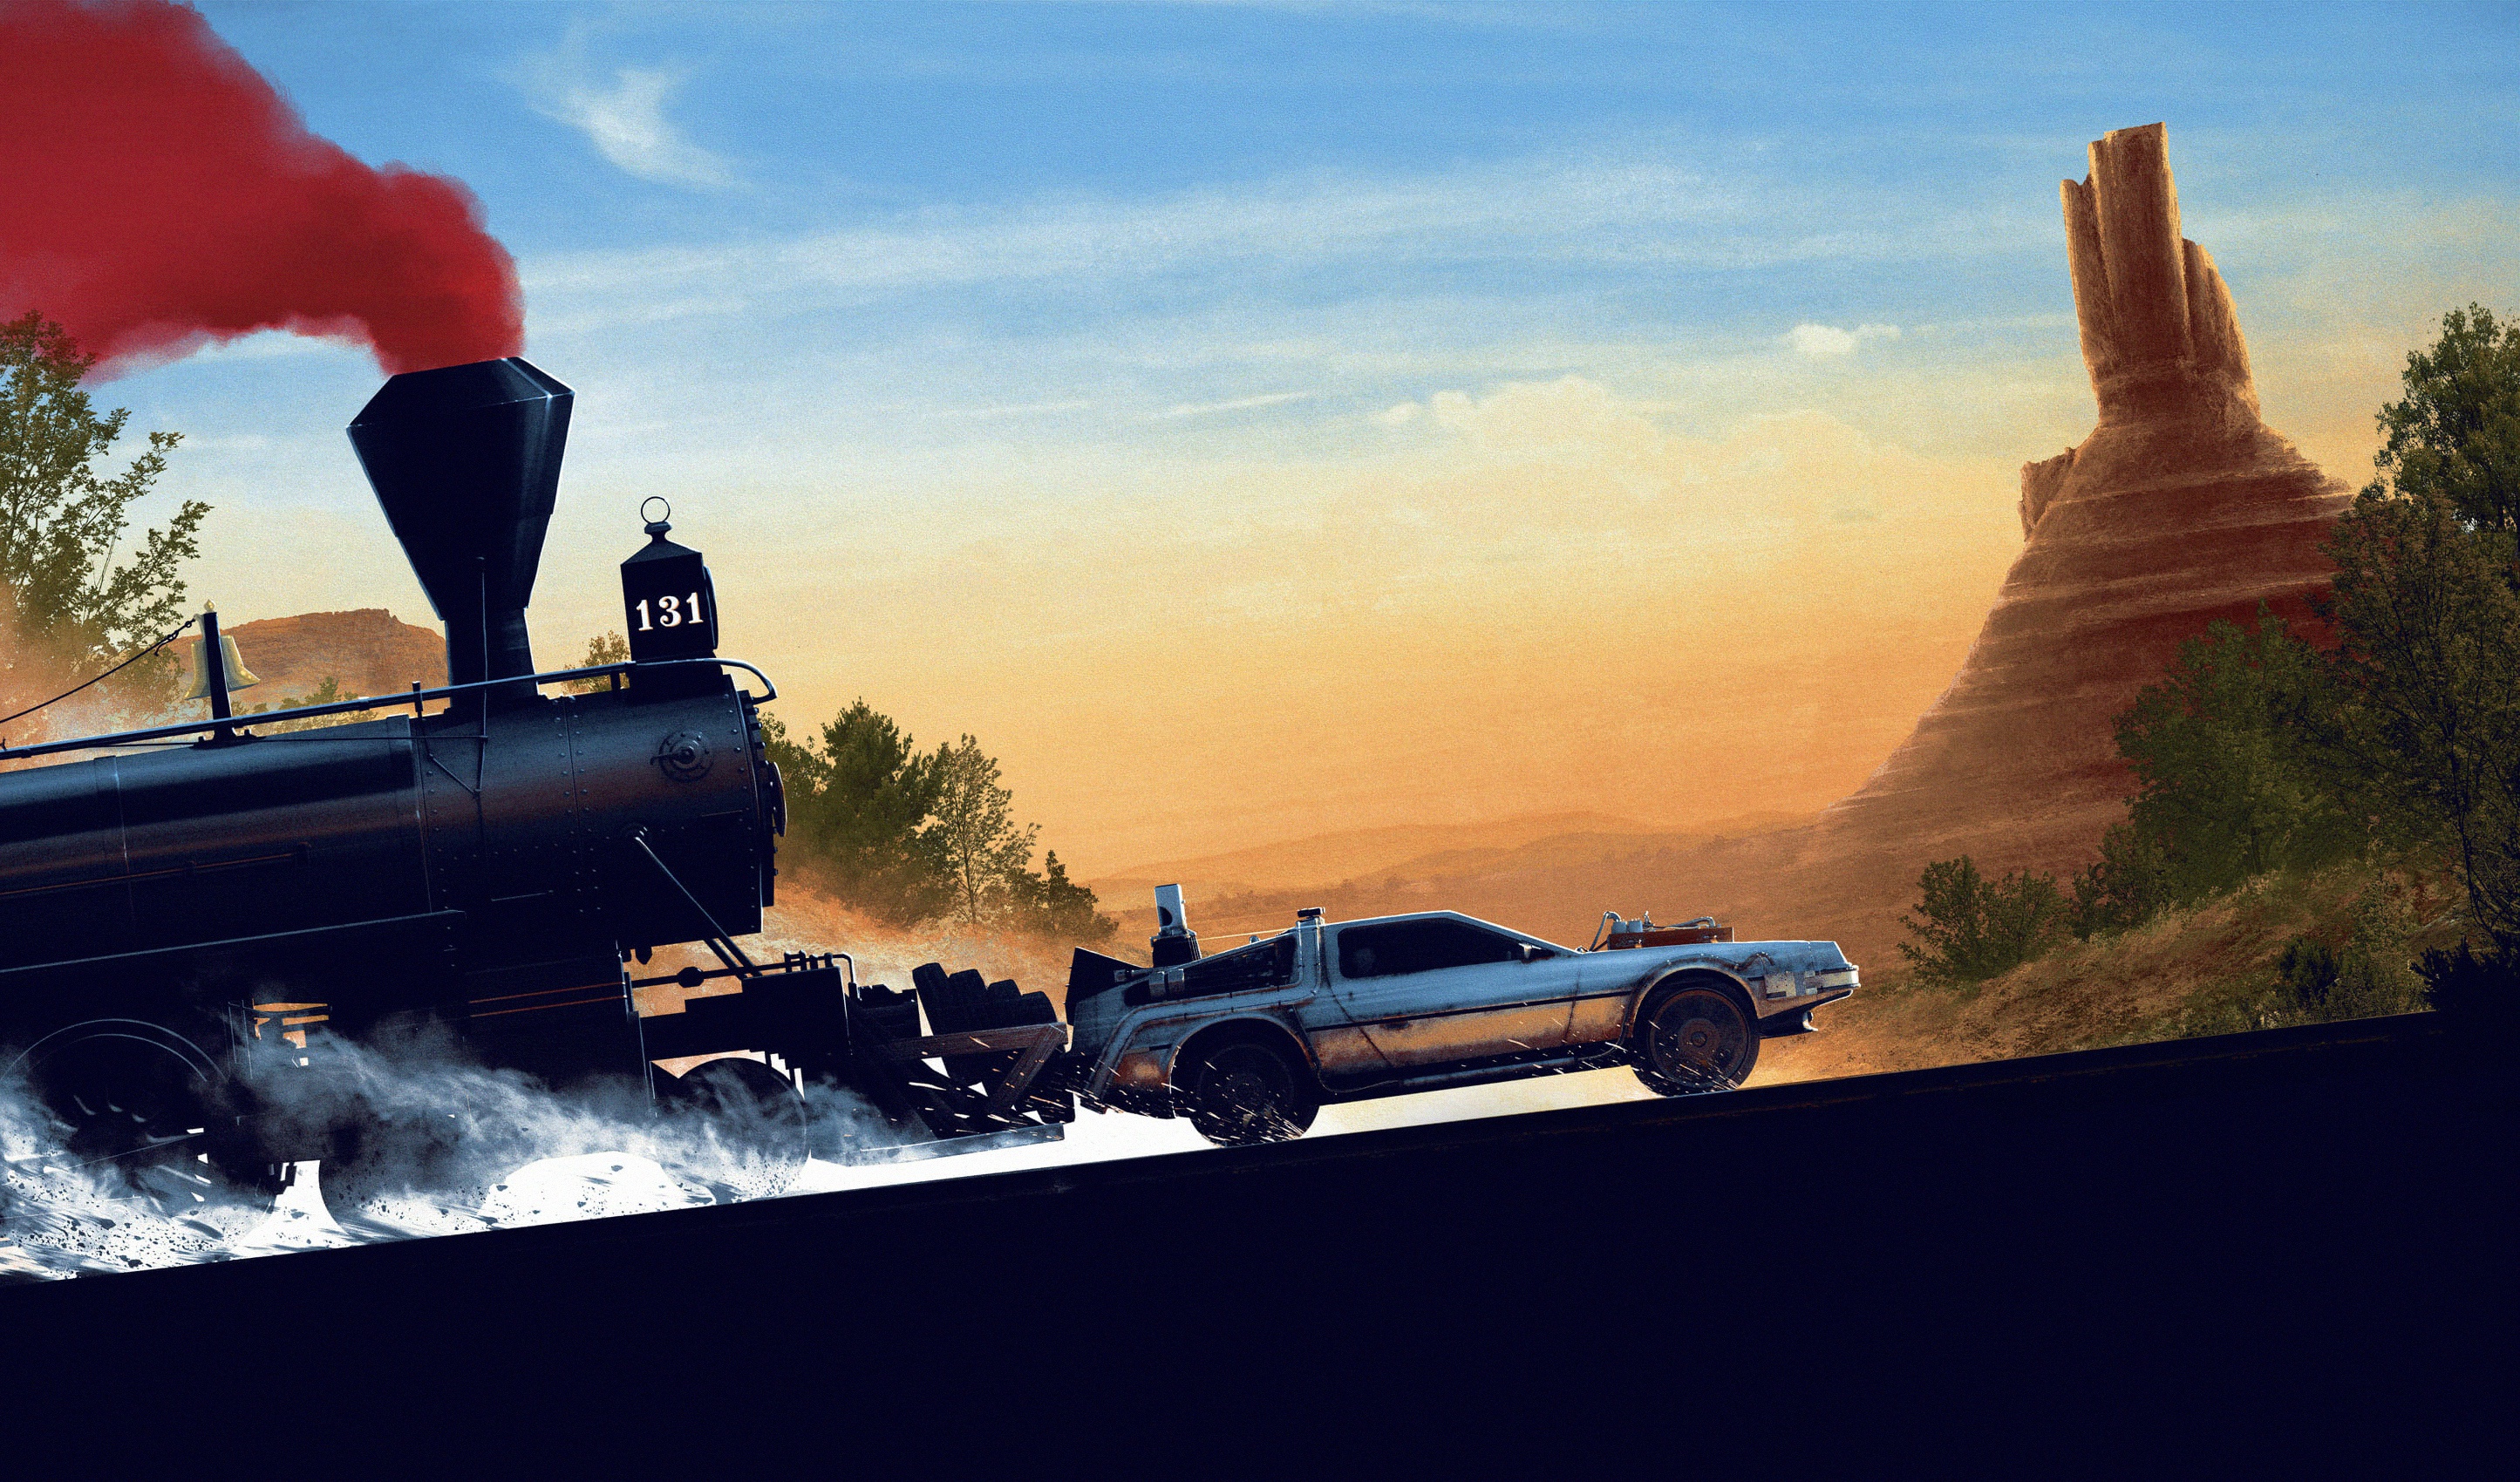 Train Time Machine DeLorean Car Movies Back To The Future Iii Movie 1990 Year Artwork 2890x1700